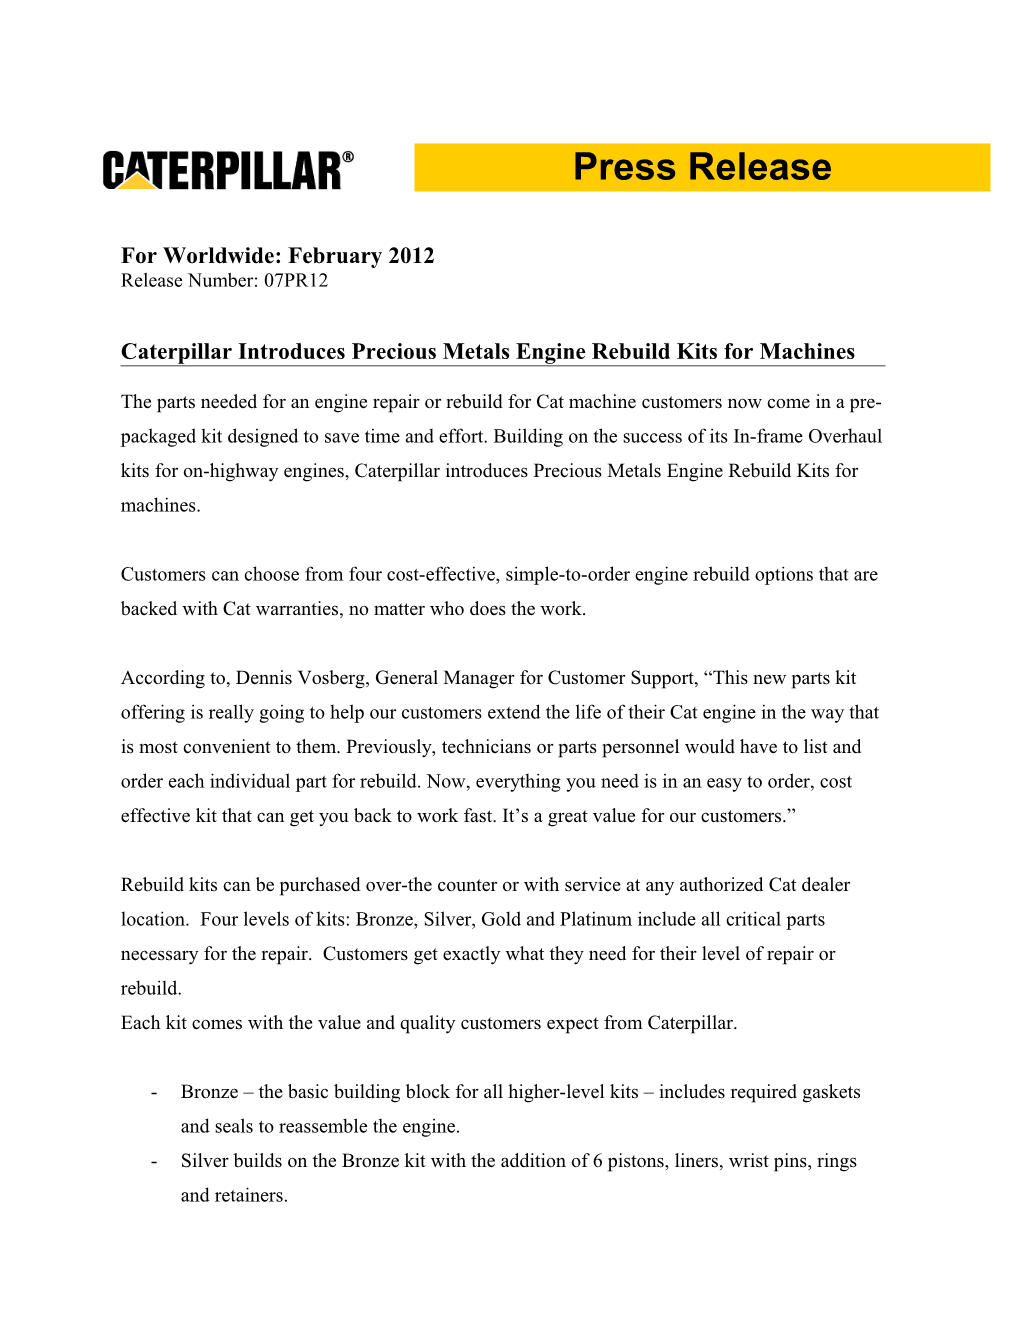 Caterpillar Introduces Precious Metals Engine Rebuild Kits for Machines